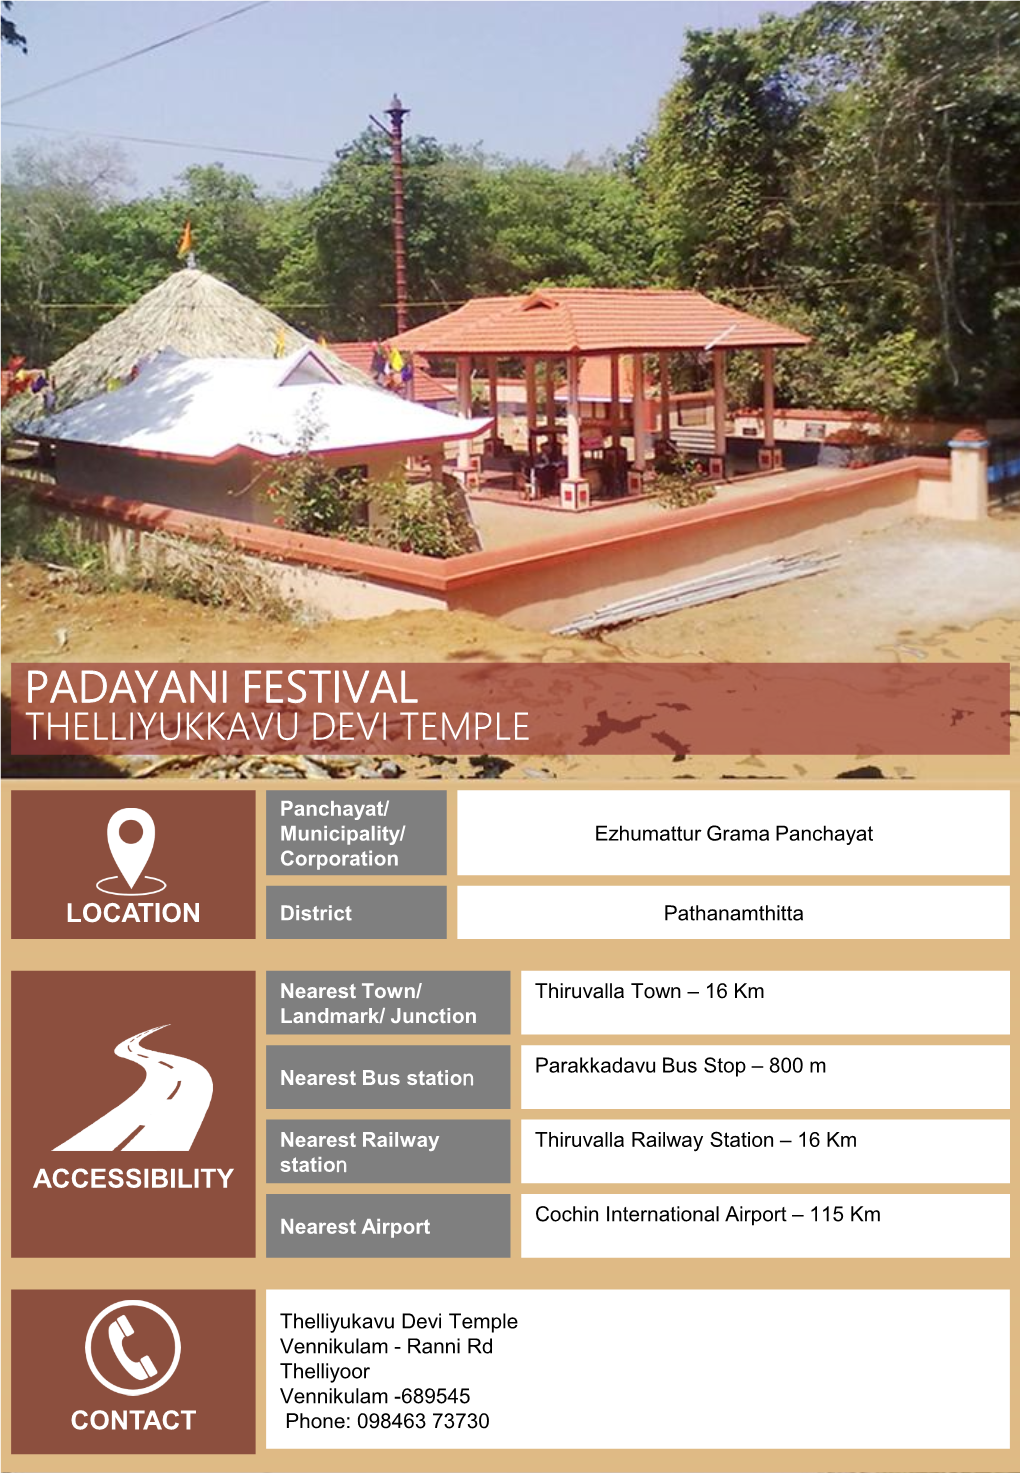 Padayani Festival Thelliyukkavu Devi Temple